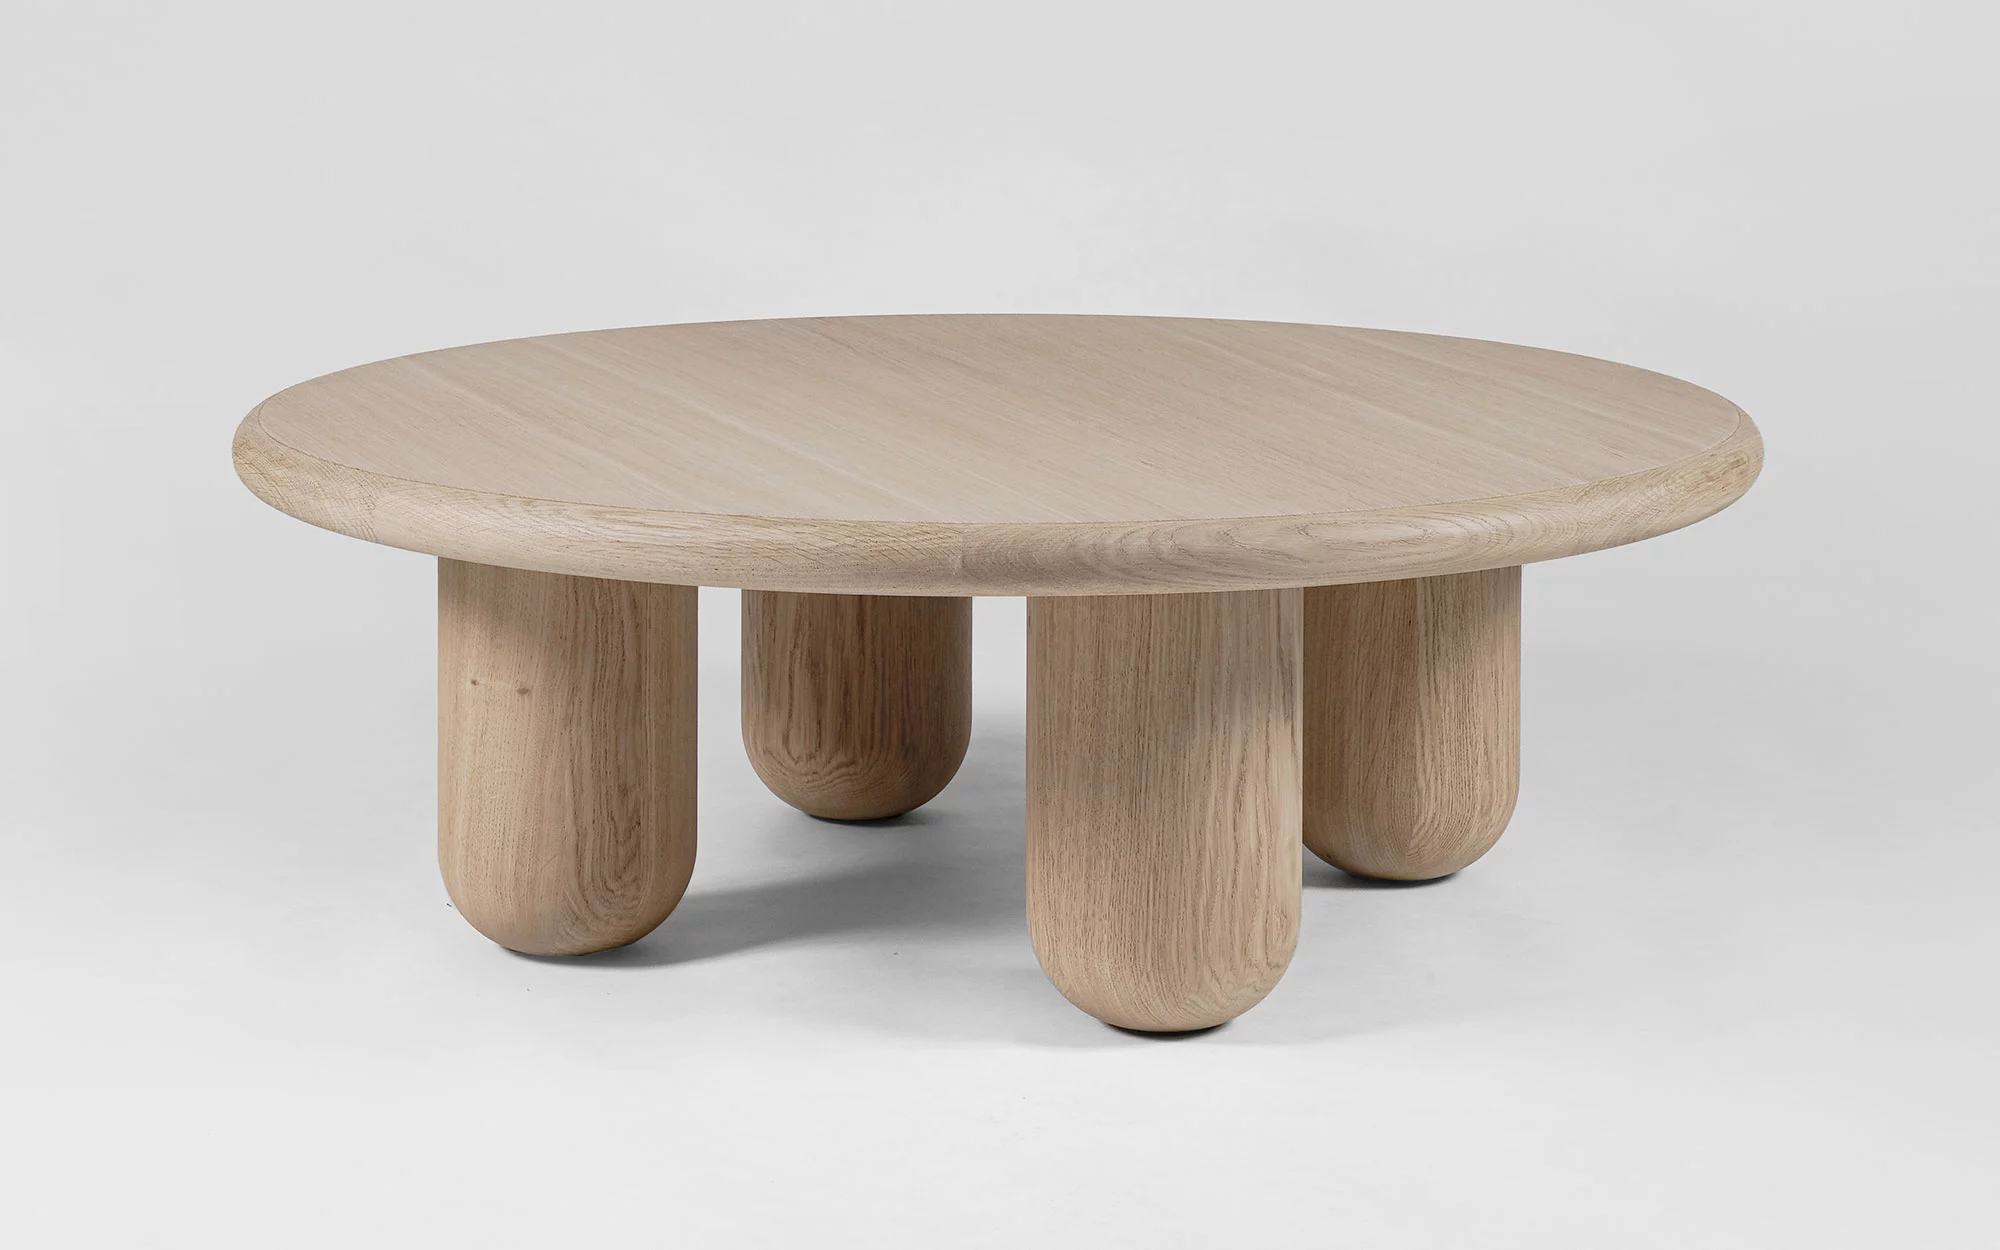 Organism coffee table - Jaime Hayon - Miscellaneous - Galerie kreo